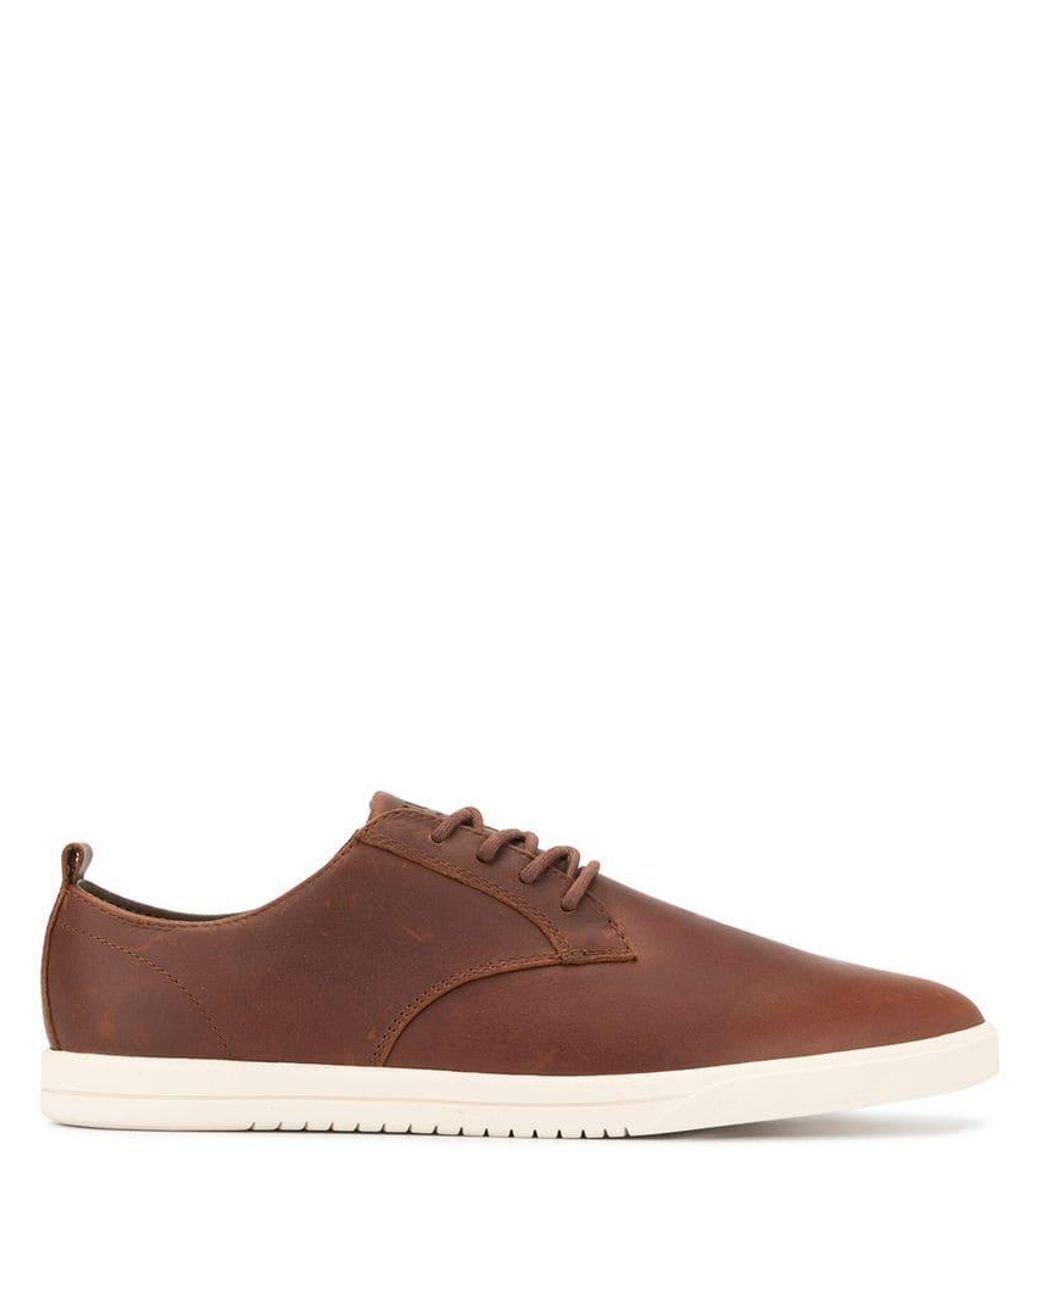 CLAE Ellington Shoes in Brown for Men - Lyst